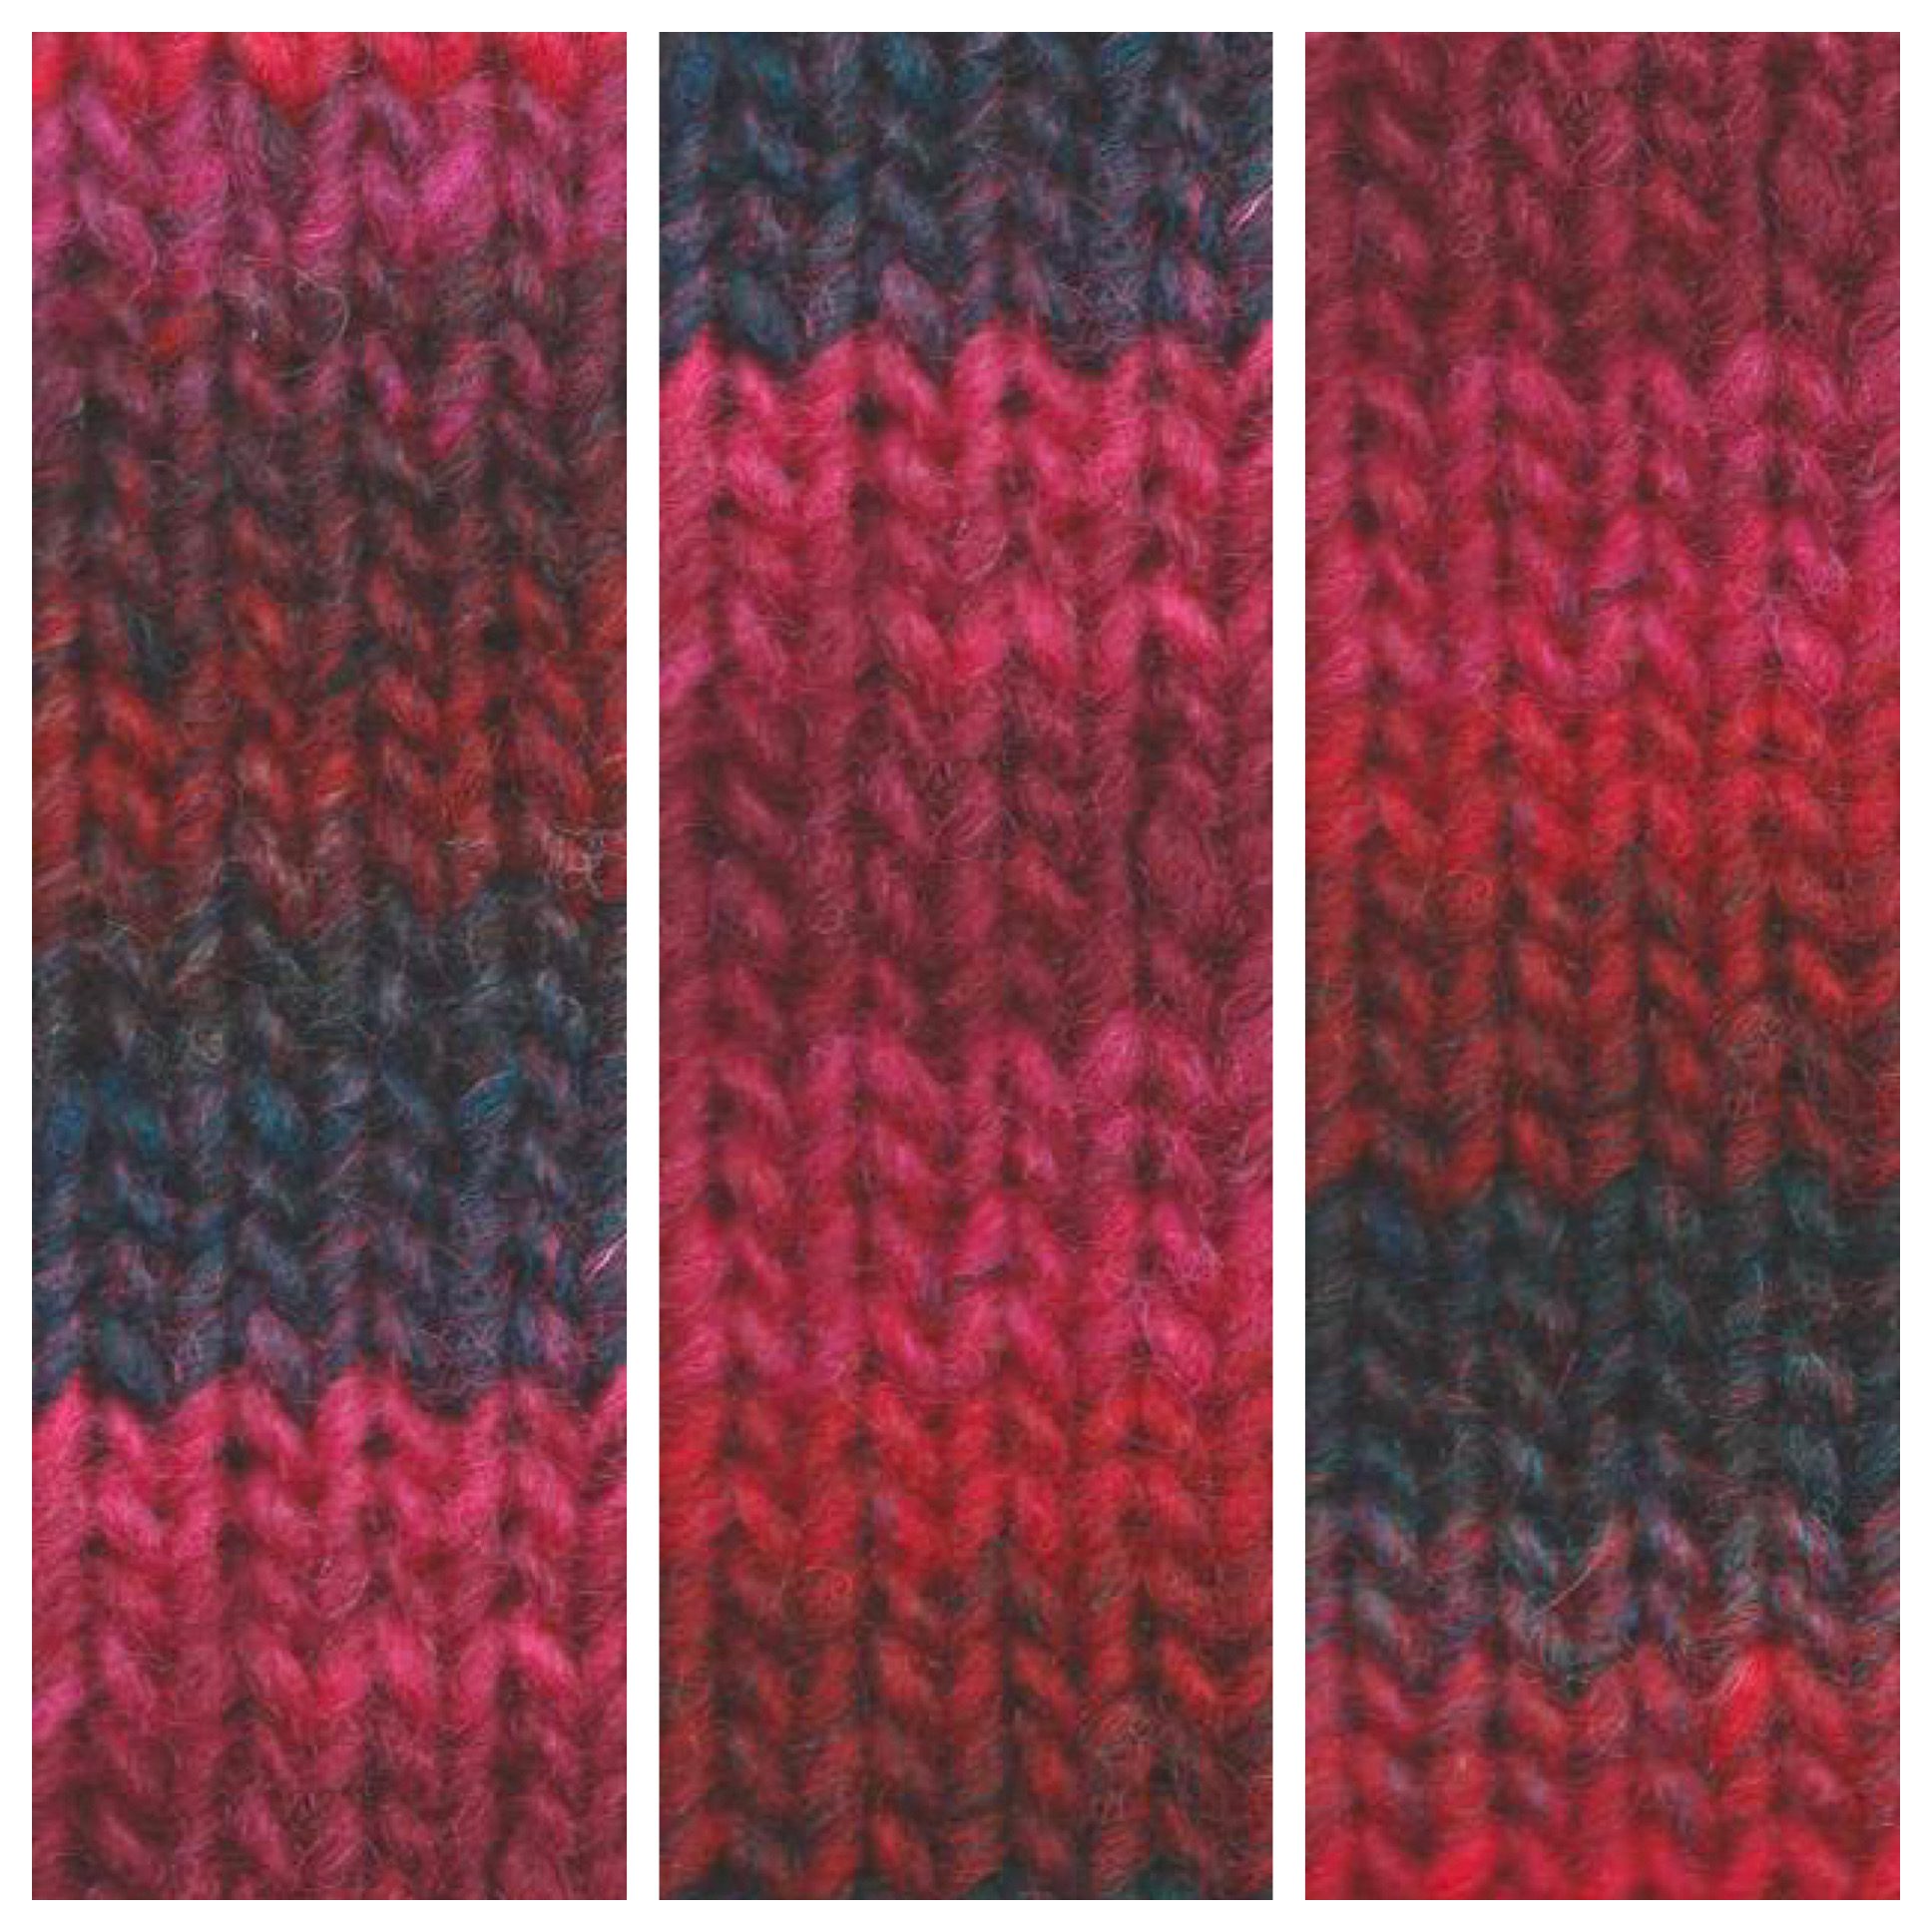 Noro Noro Kureyon DK Double Knitting Worsted Multicoloured Merino Wool Crochet Yarn 